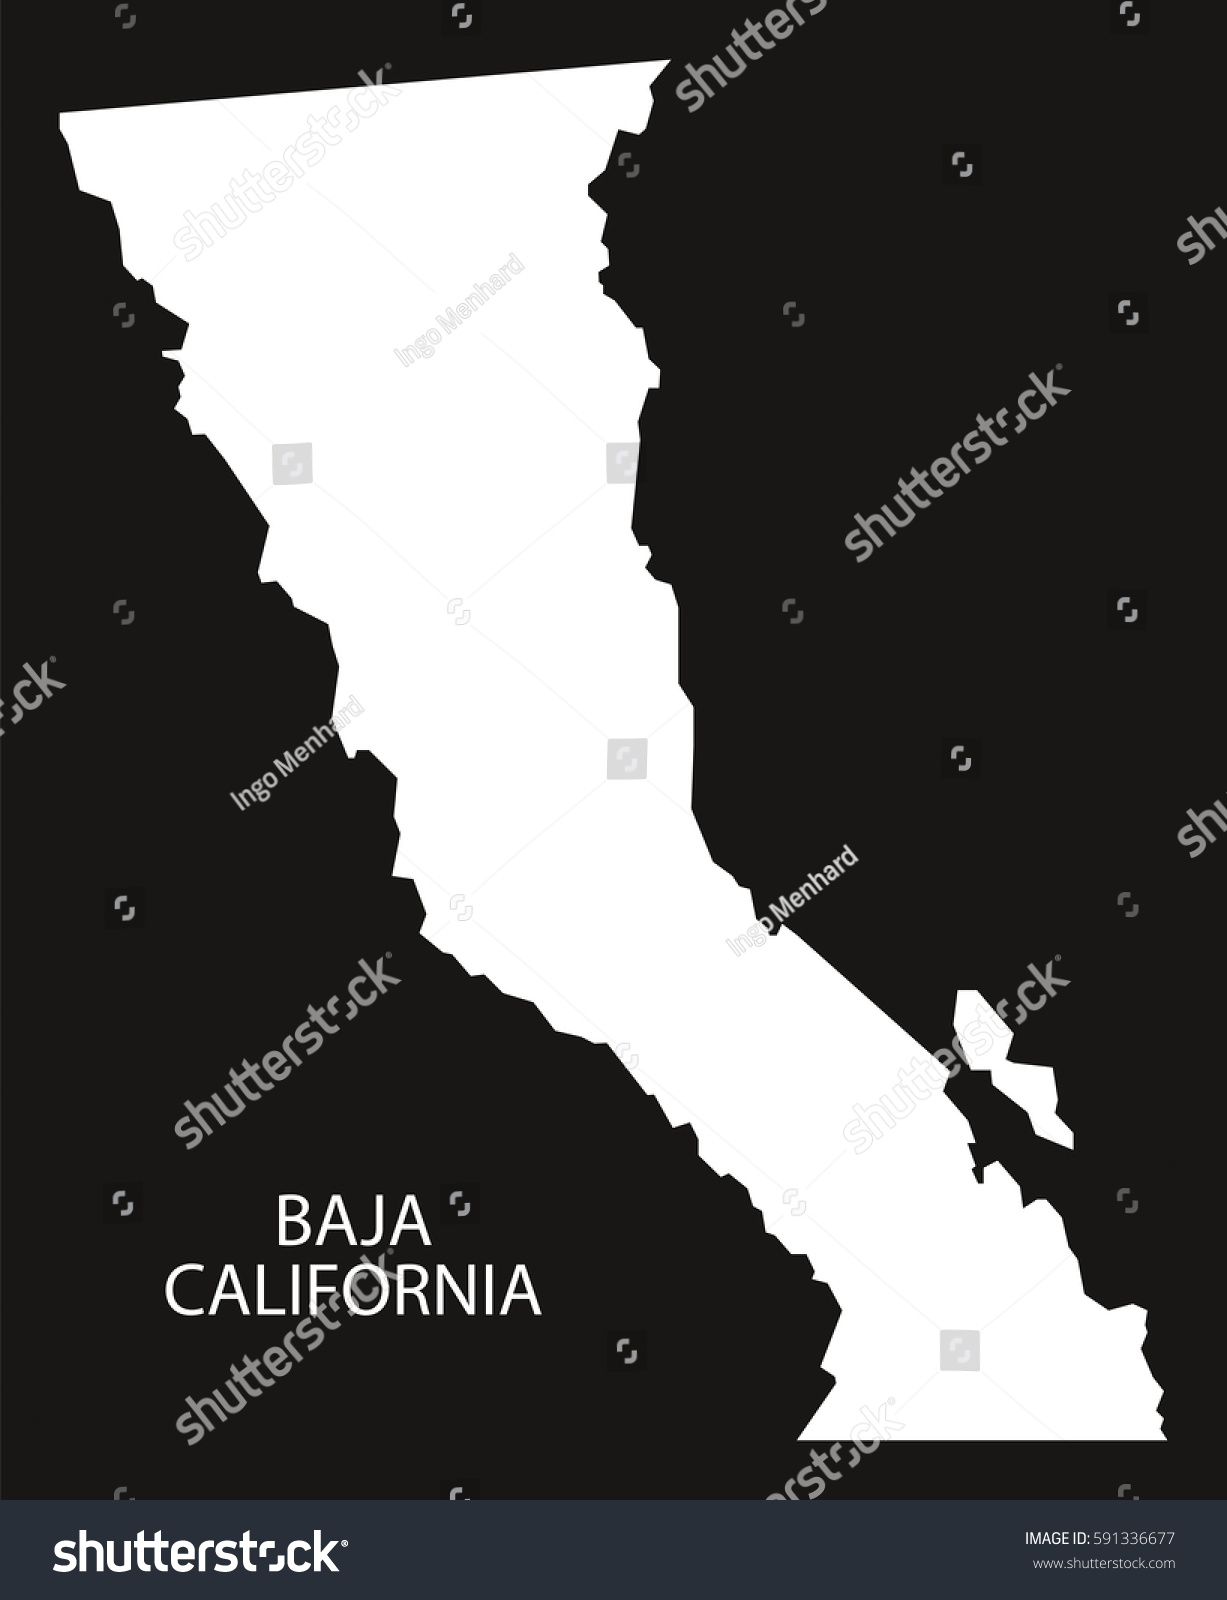 Baja California Mexico Map Black Inverted Royalty Free Stock Vector 591336677 1885